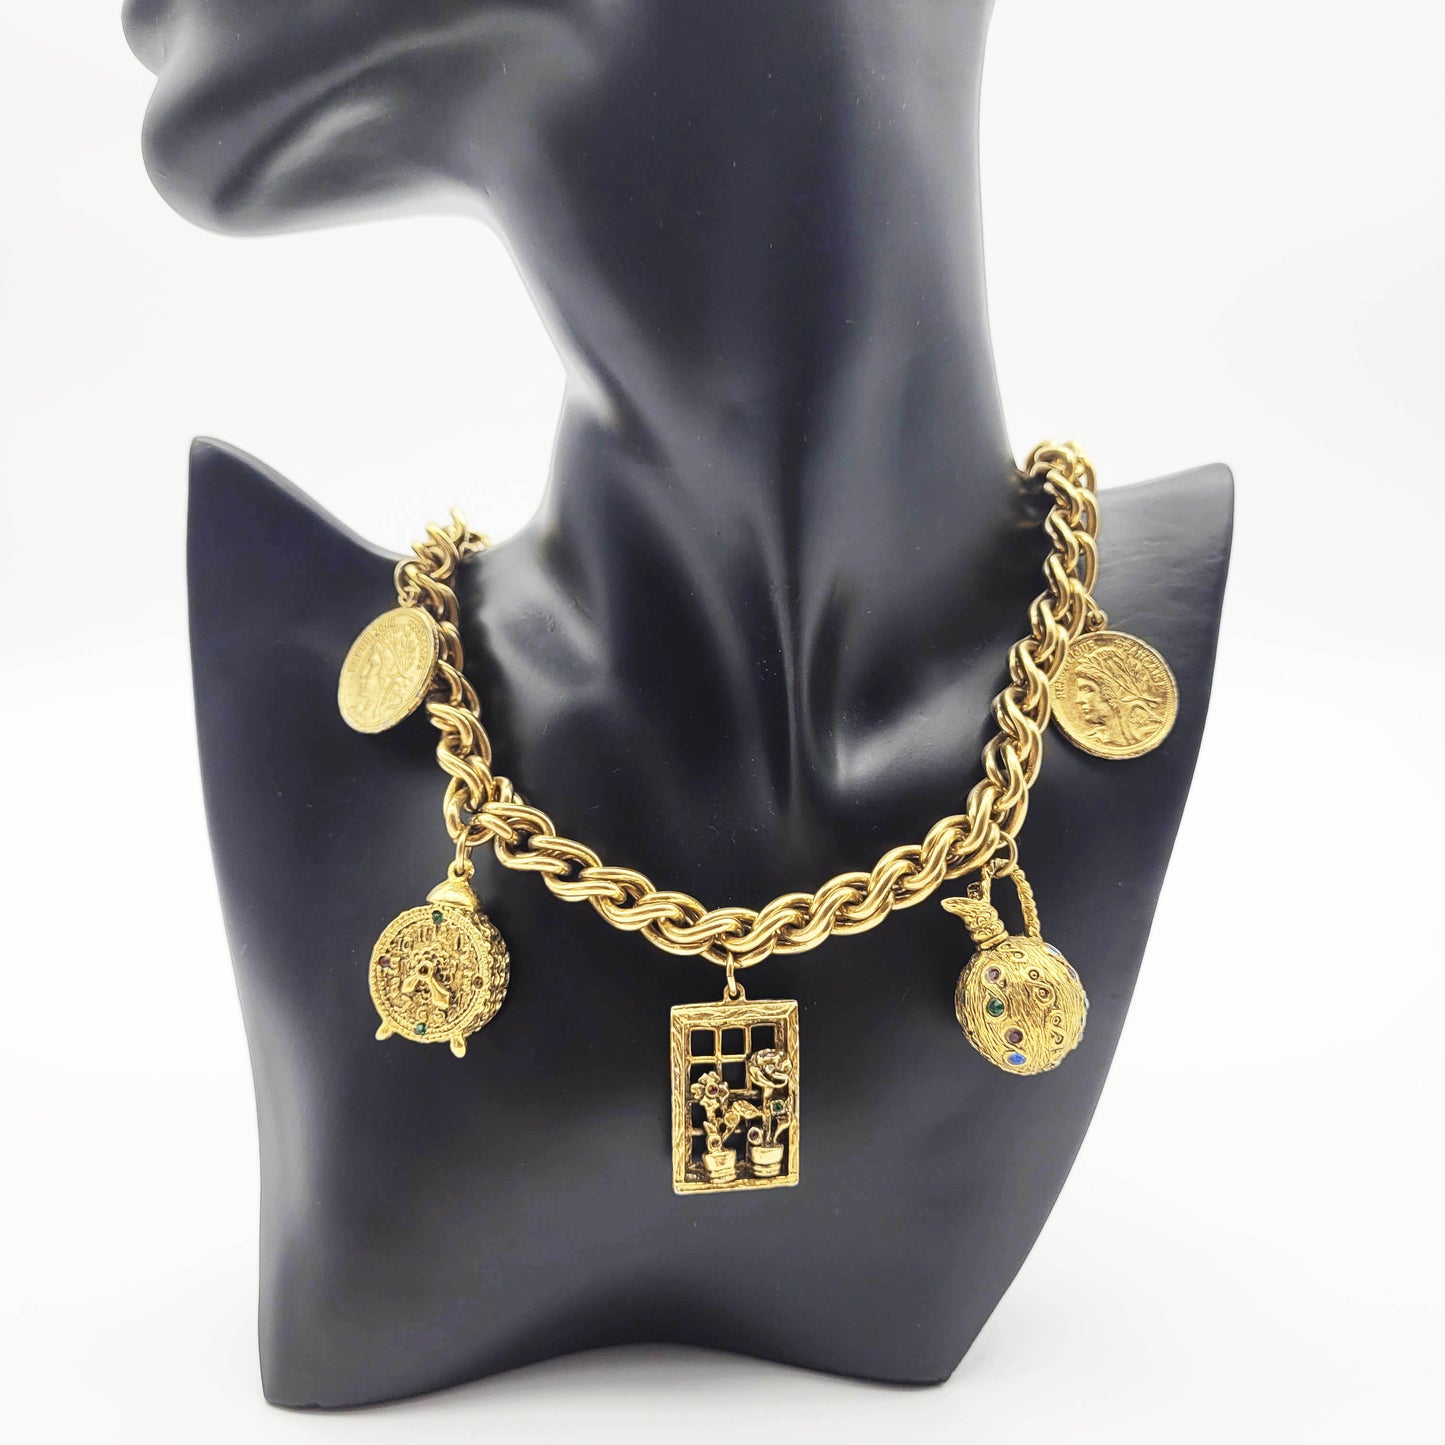 Vintage goldtone chain necklace